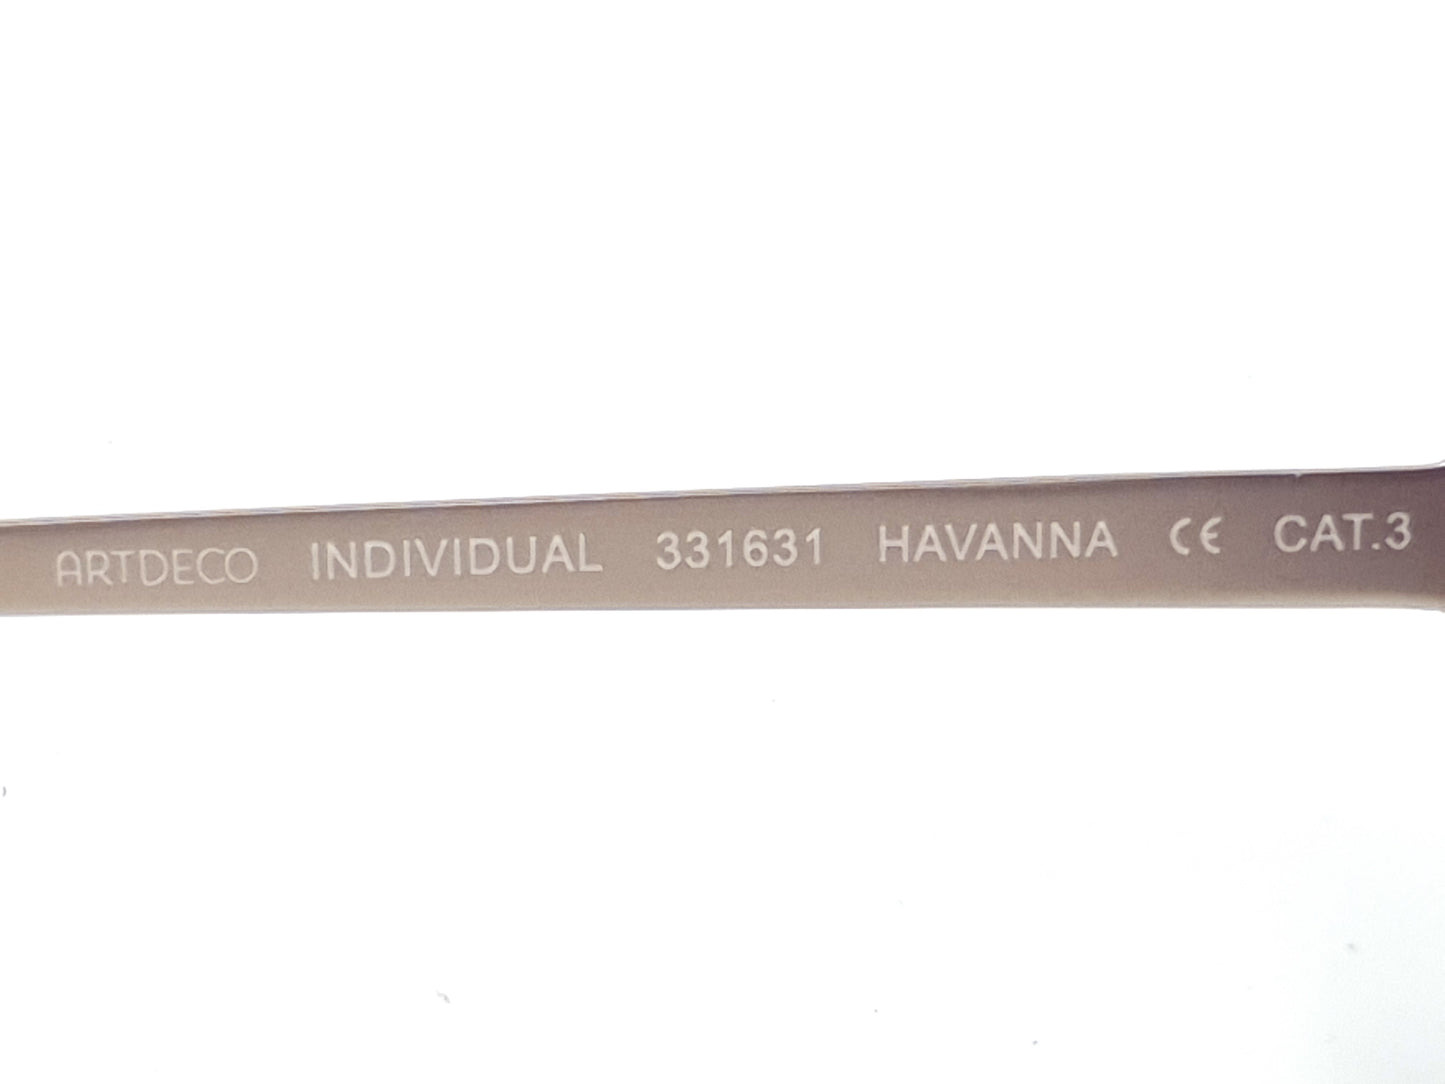 ARTDECO INDIVIDUAL 331631 HAVANA